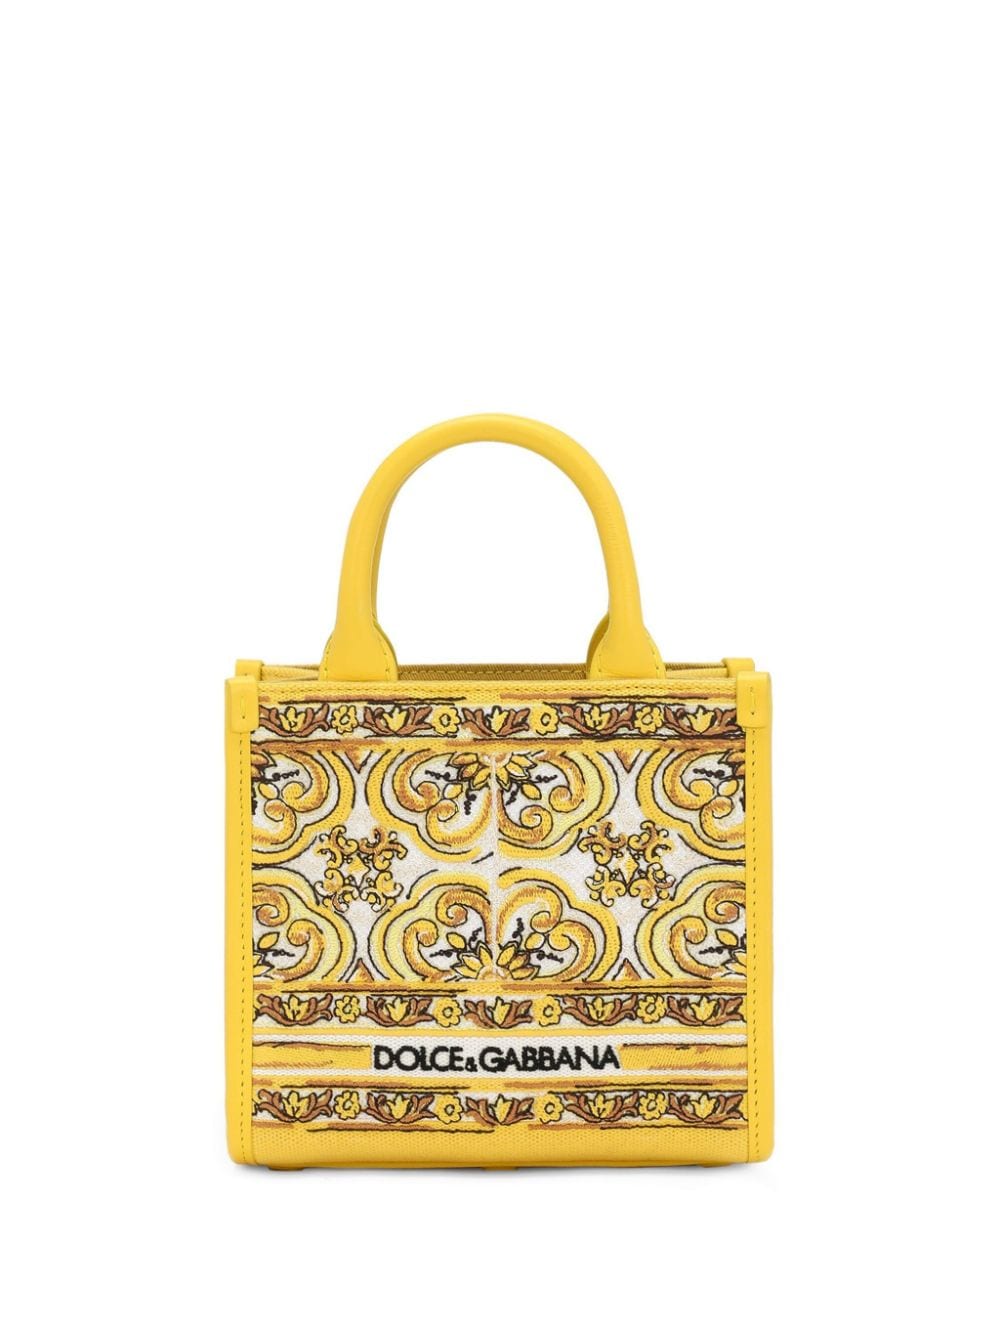 DOLCE & GABBANA DG DAILY MINI Tote Handbag Handbag